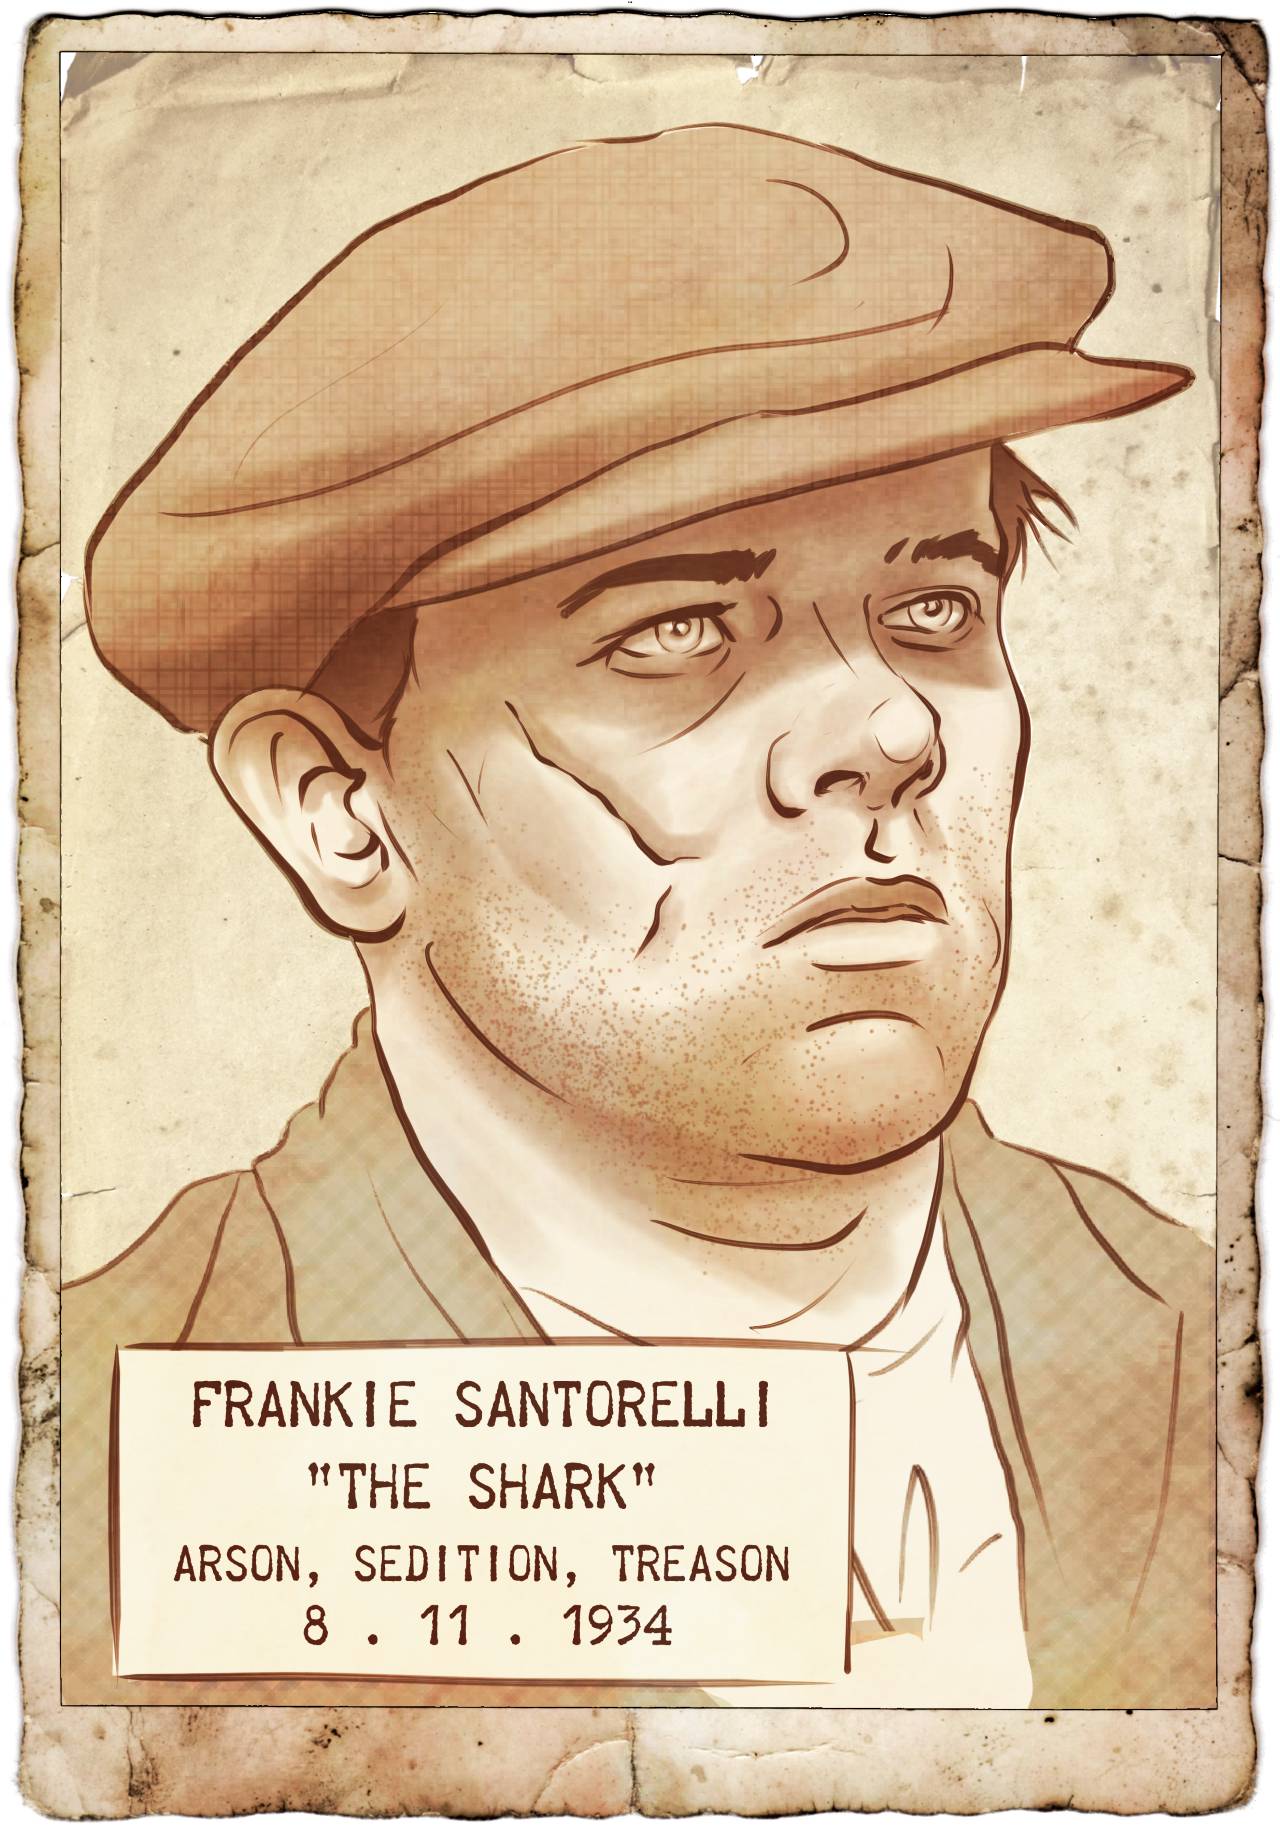 Frankie Santorelli